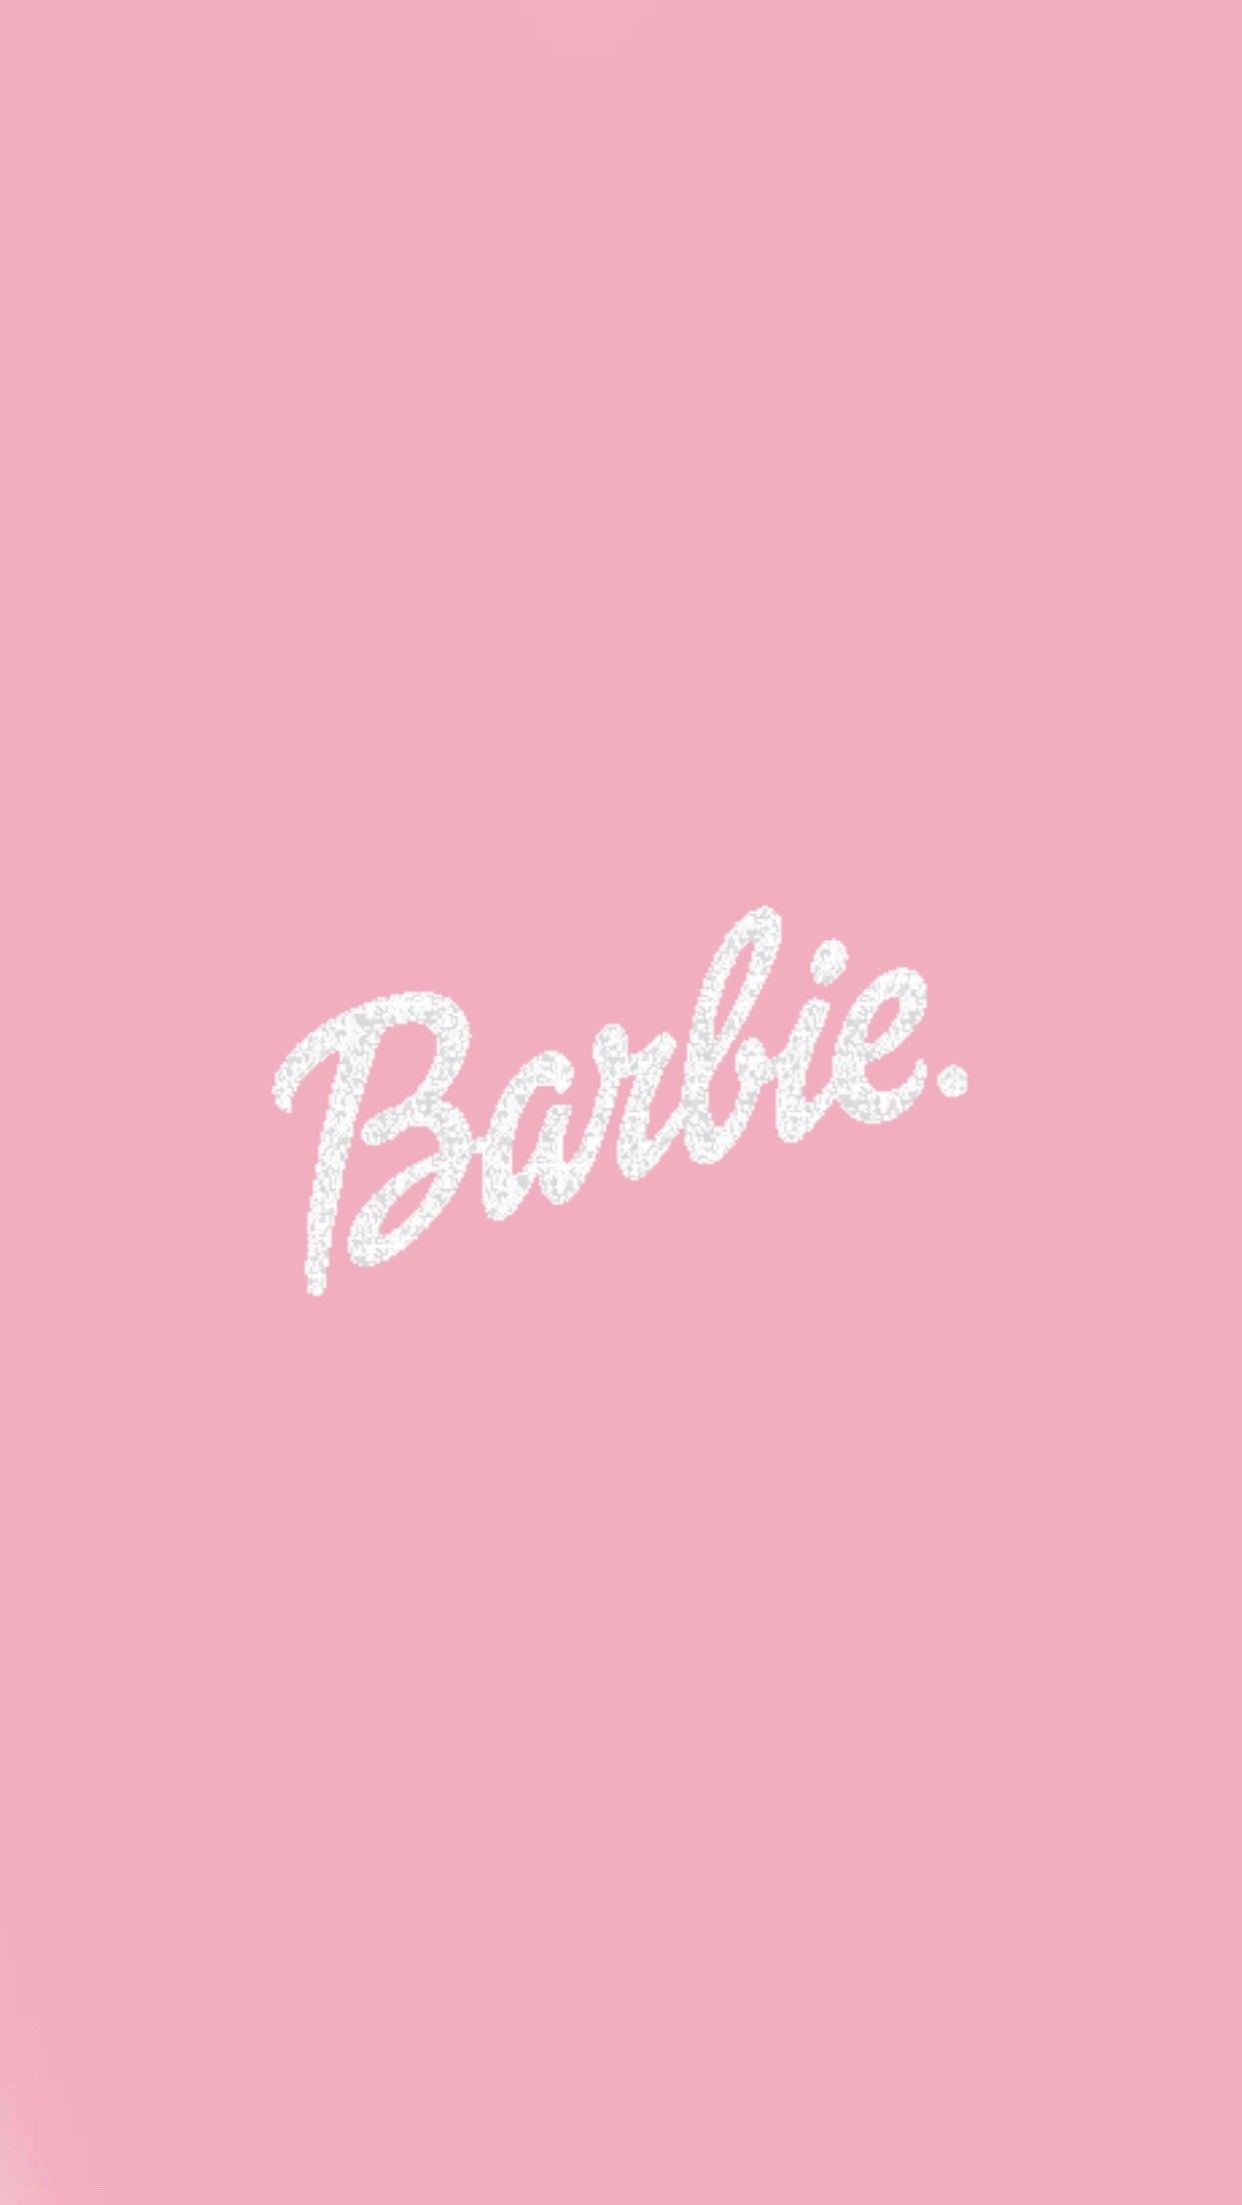 Barbie Wallpaper Barbie Theme Retro Wallpaper Aesthetic Iphone | Images ...